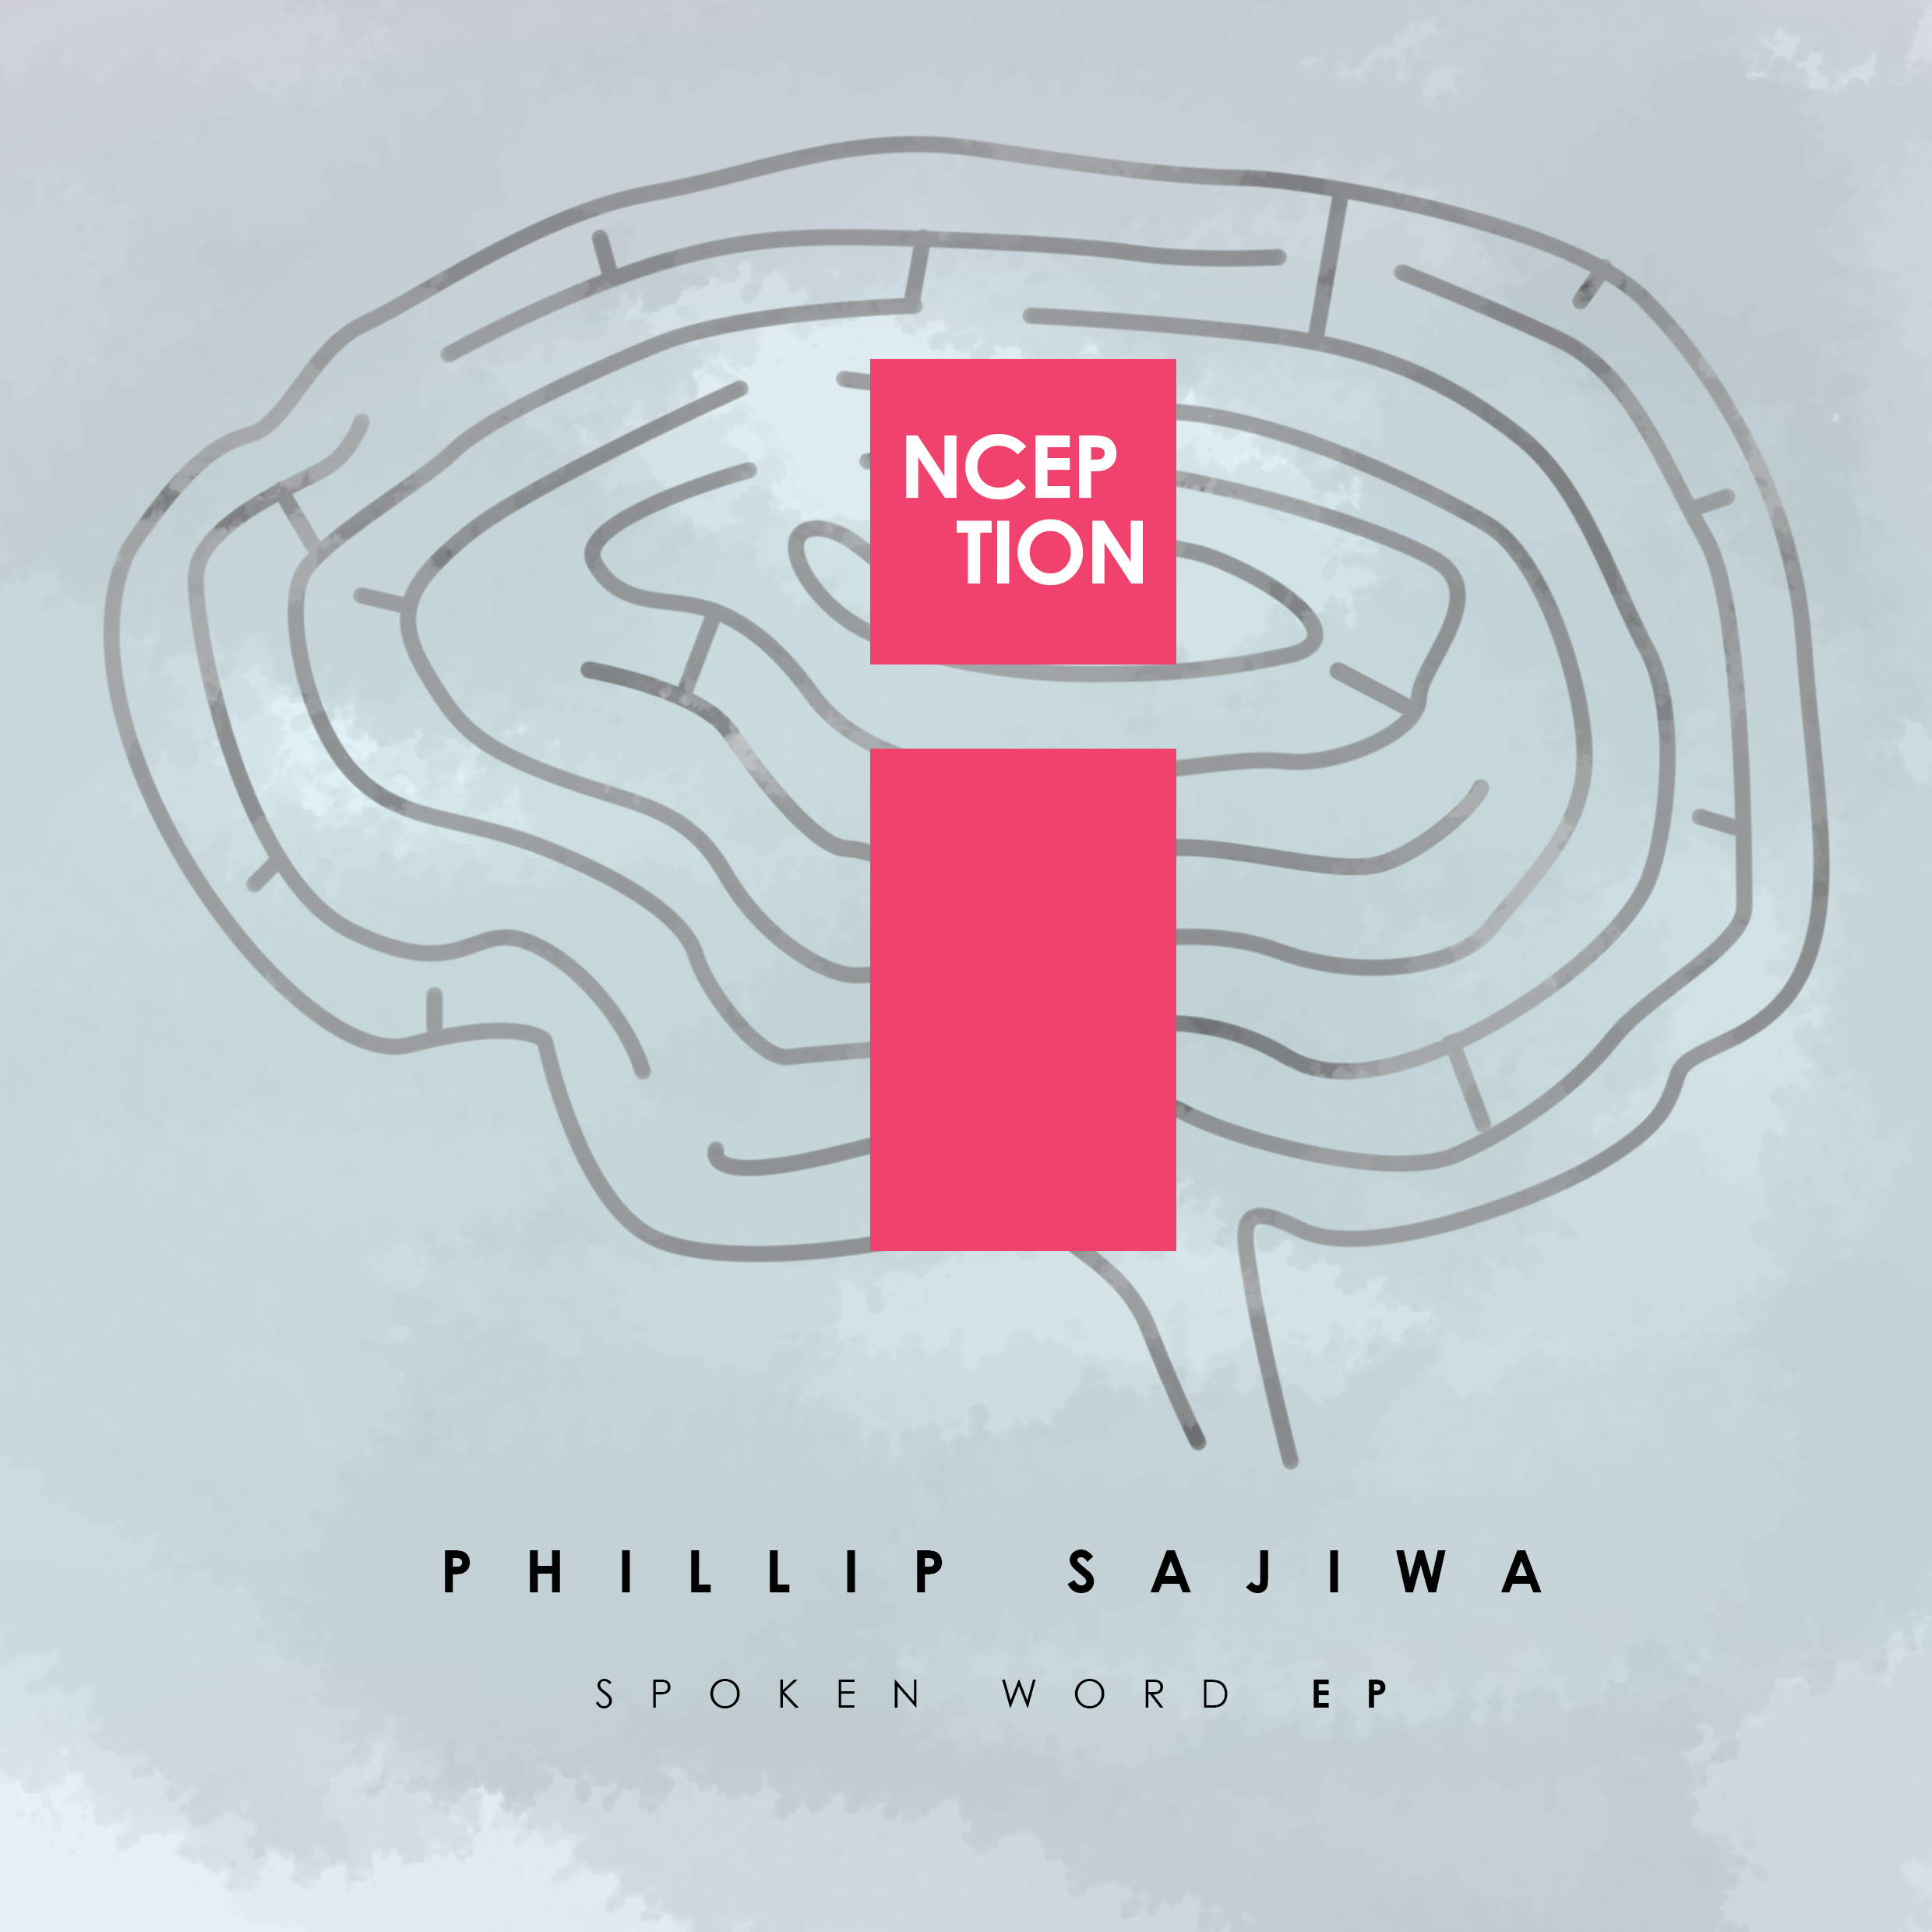  [EP Download]Phillip Sajiwa – Inception (spoken word)